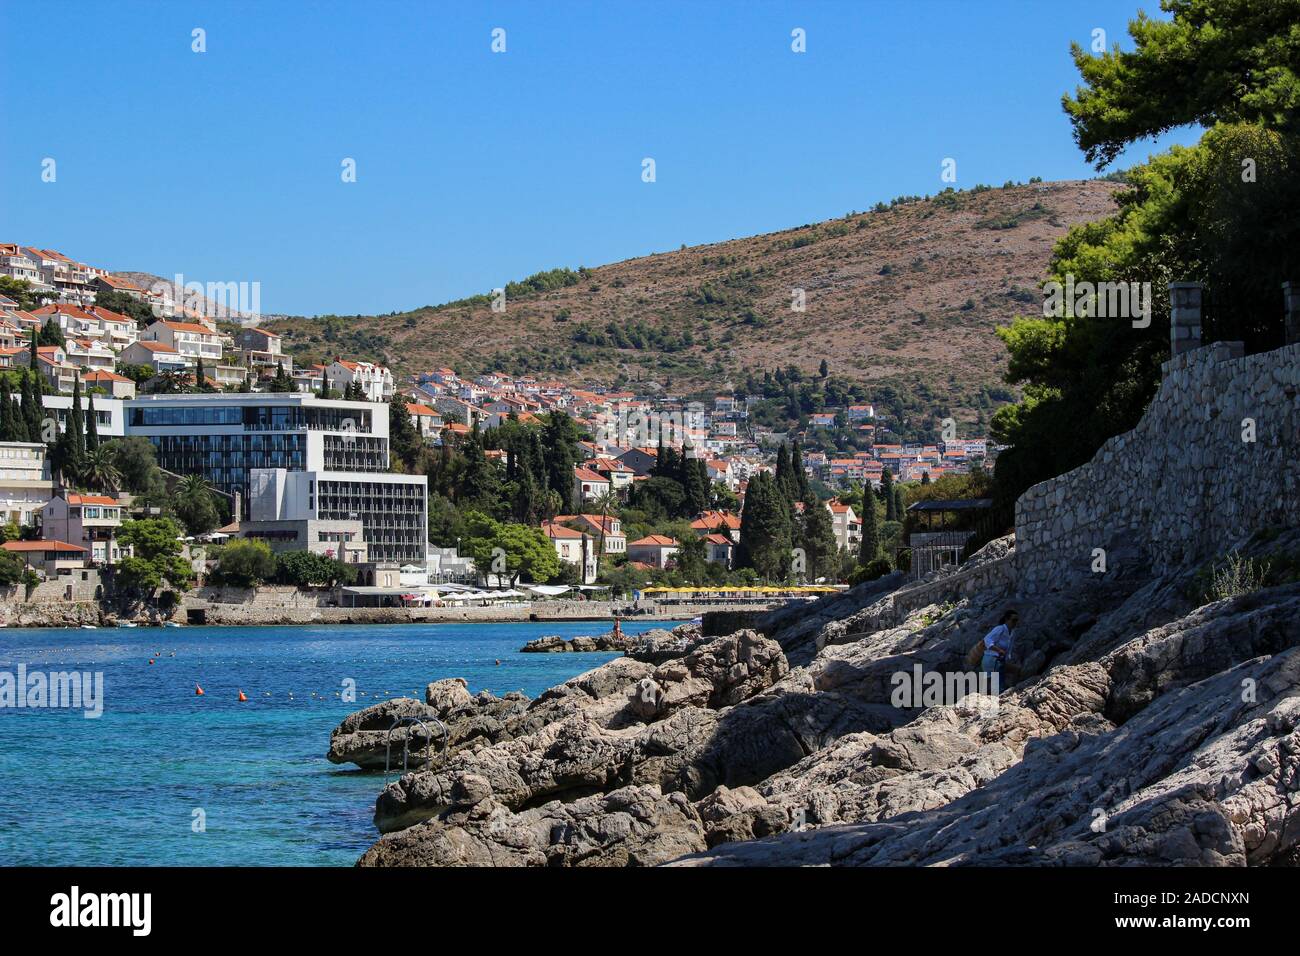 Scenic semi-urban view in Dubrovnik, Croatia Stock Photo